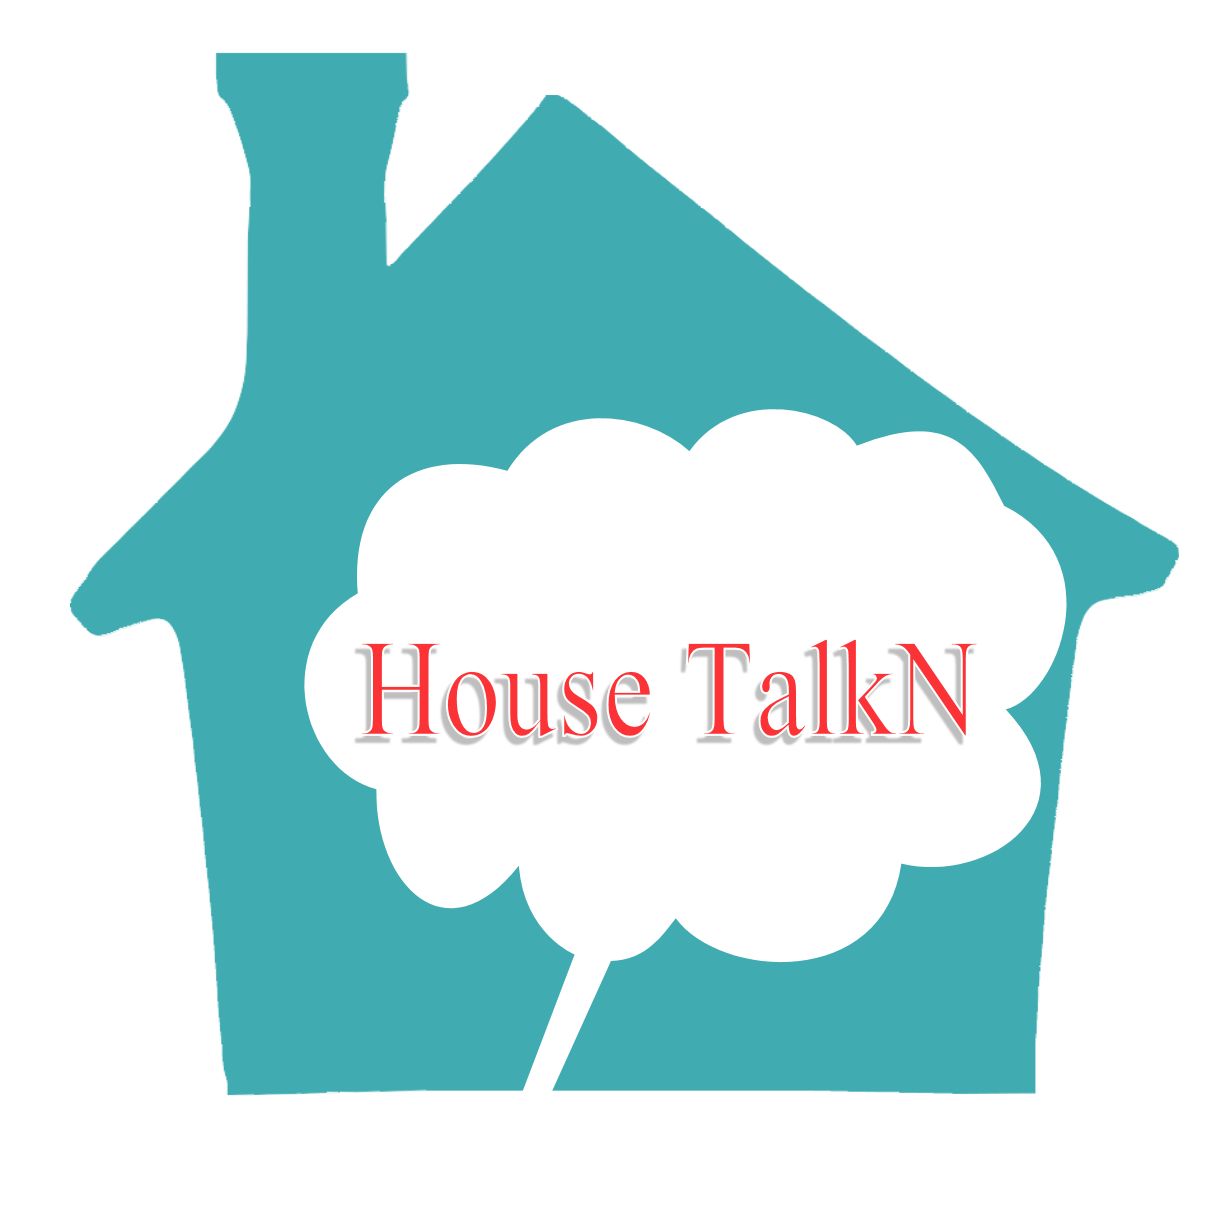 House Talkn